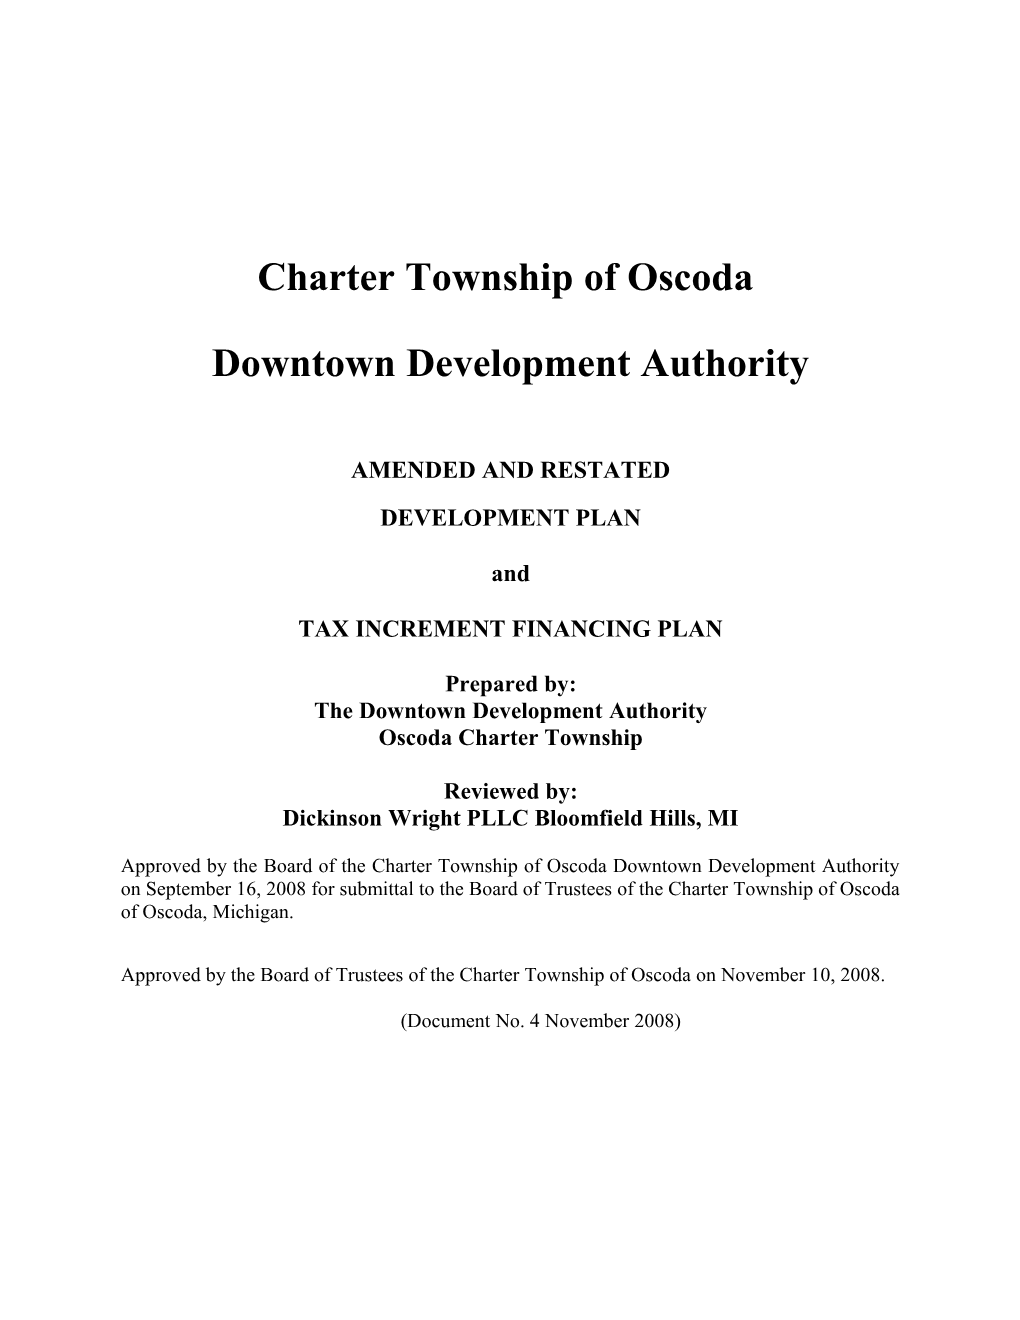 DDA/TIFA Development Plan Revision- Aug 2007